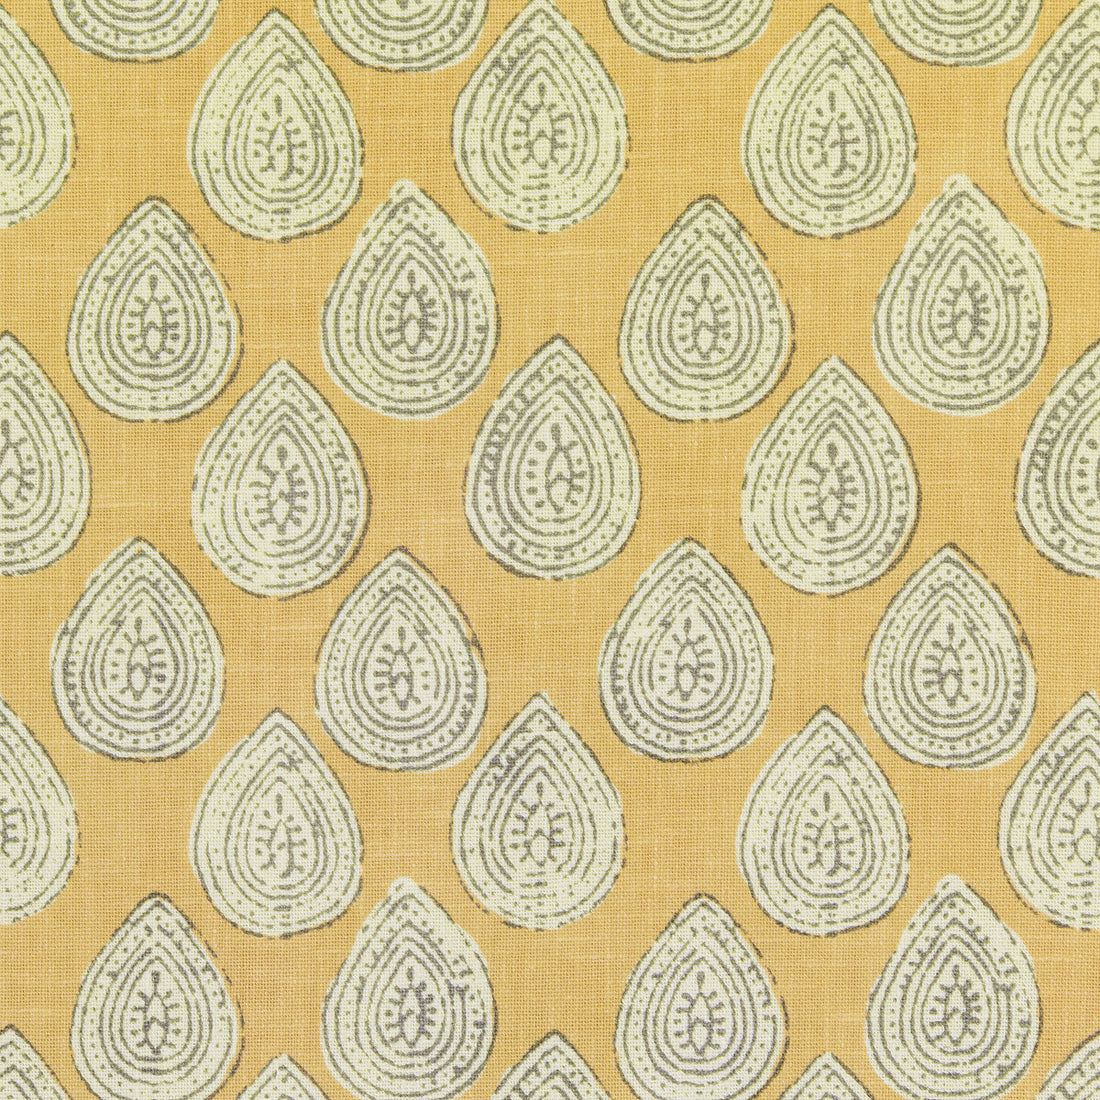 Kravet Basics fabric in calico-411 color - pattern CALICO.411.0 - by Kravet Basics in the L&